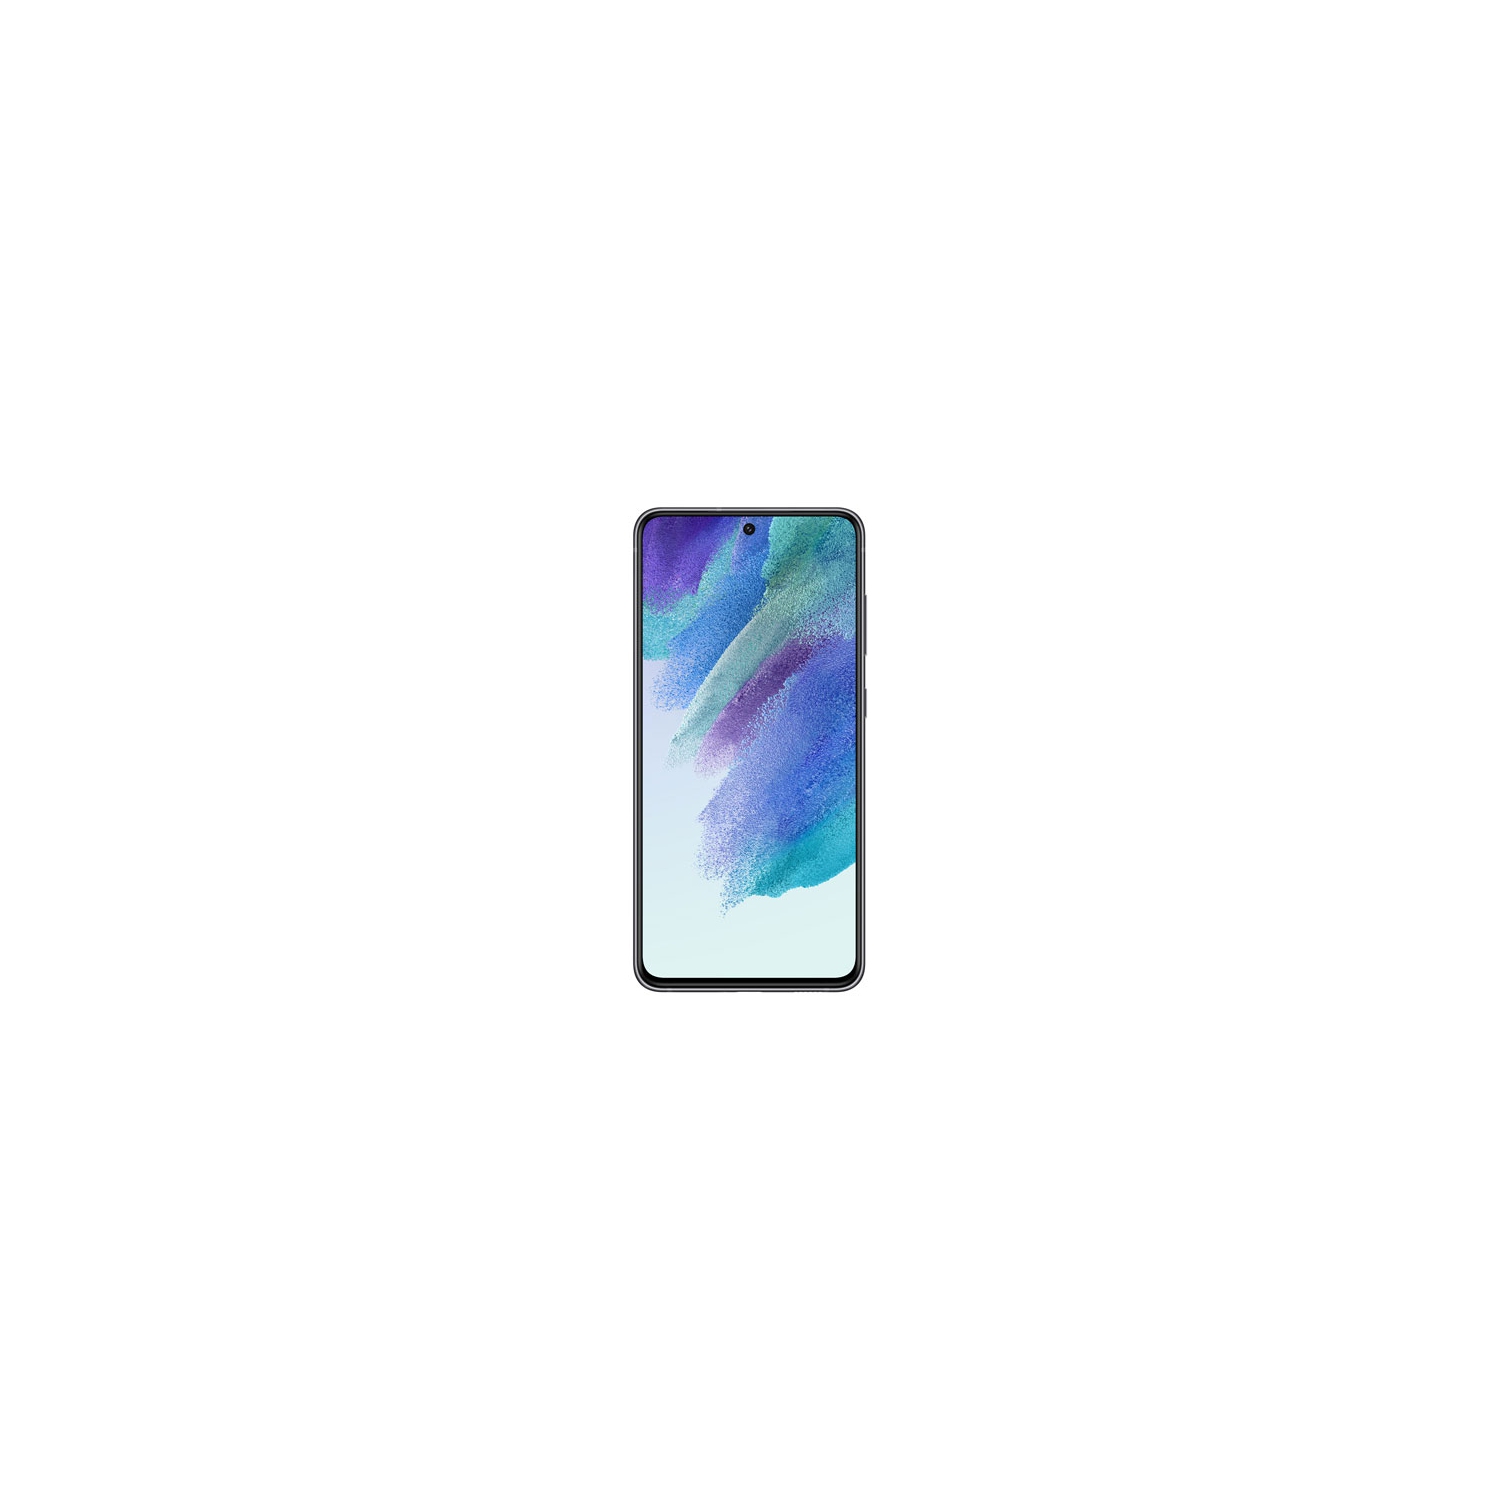 Samsung Galaxy S21 FE 5G 128GB - Graphite - Unlocked - Open Box